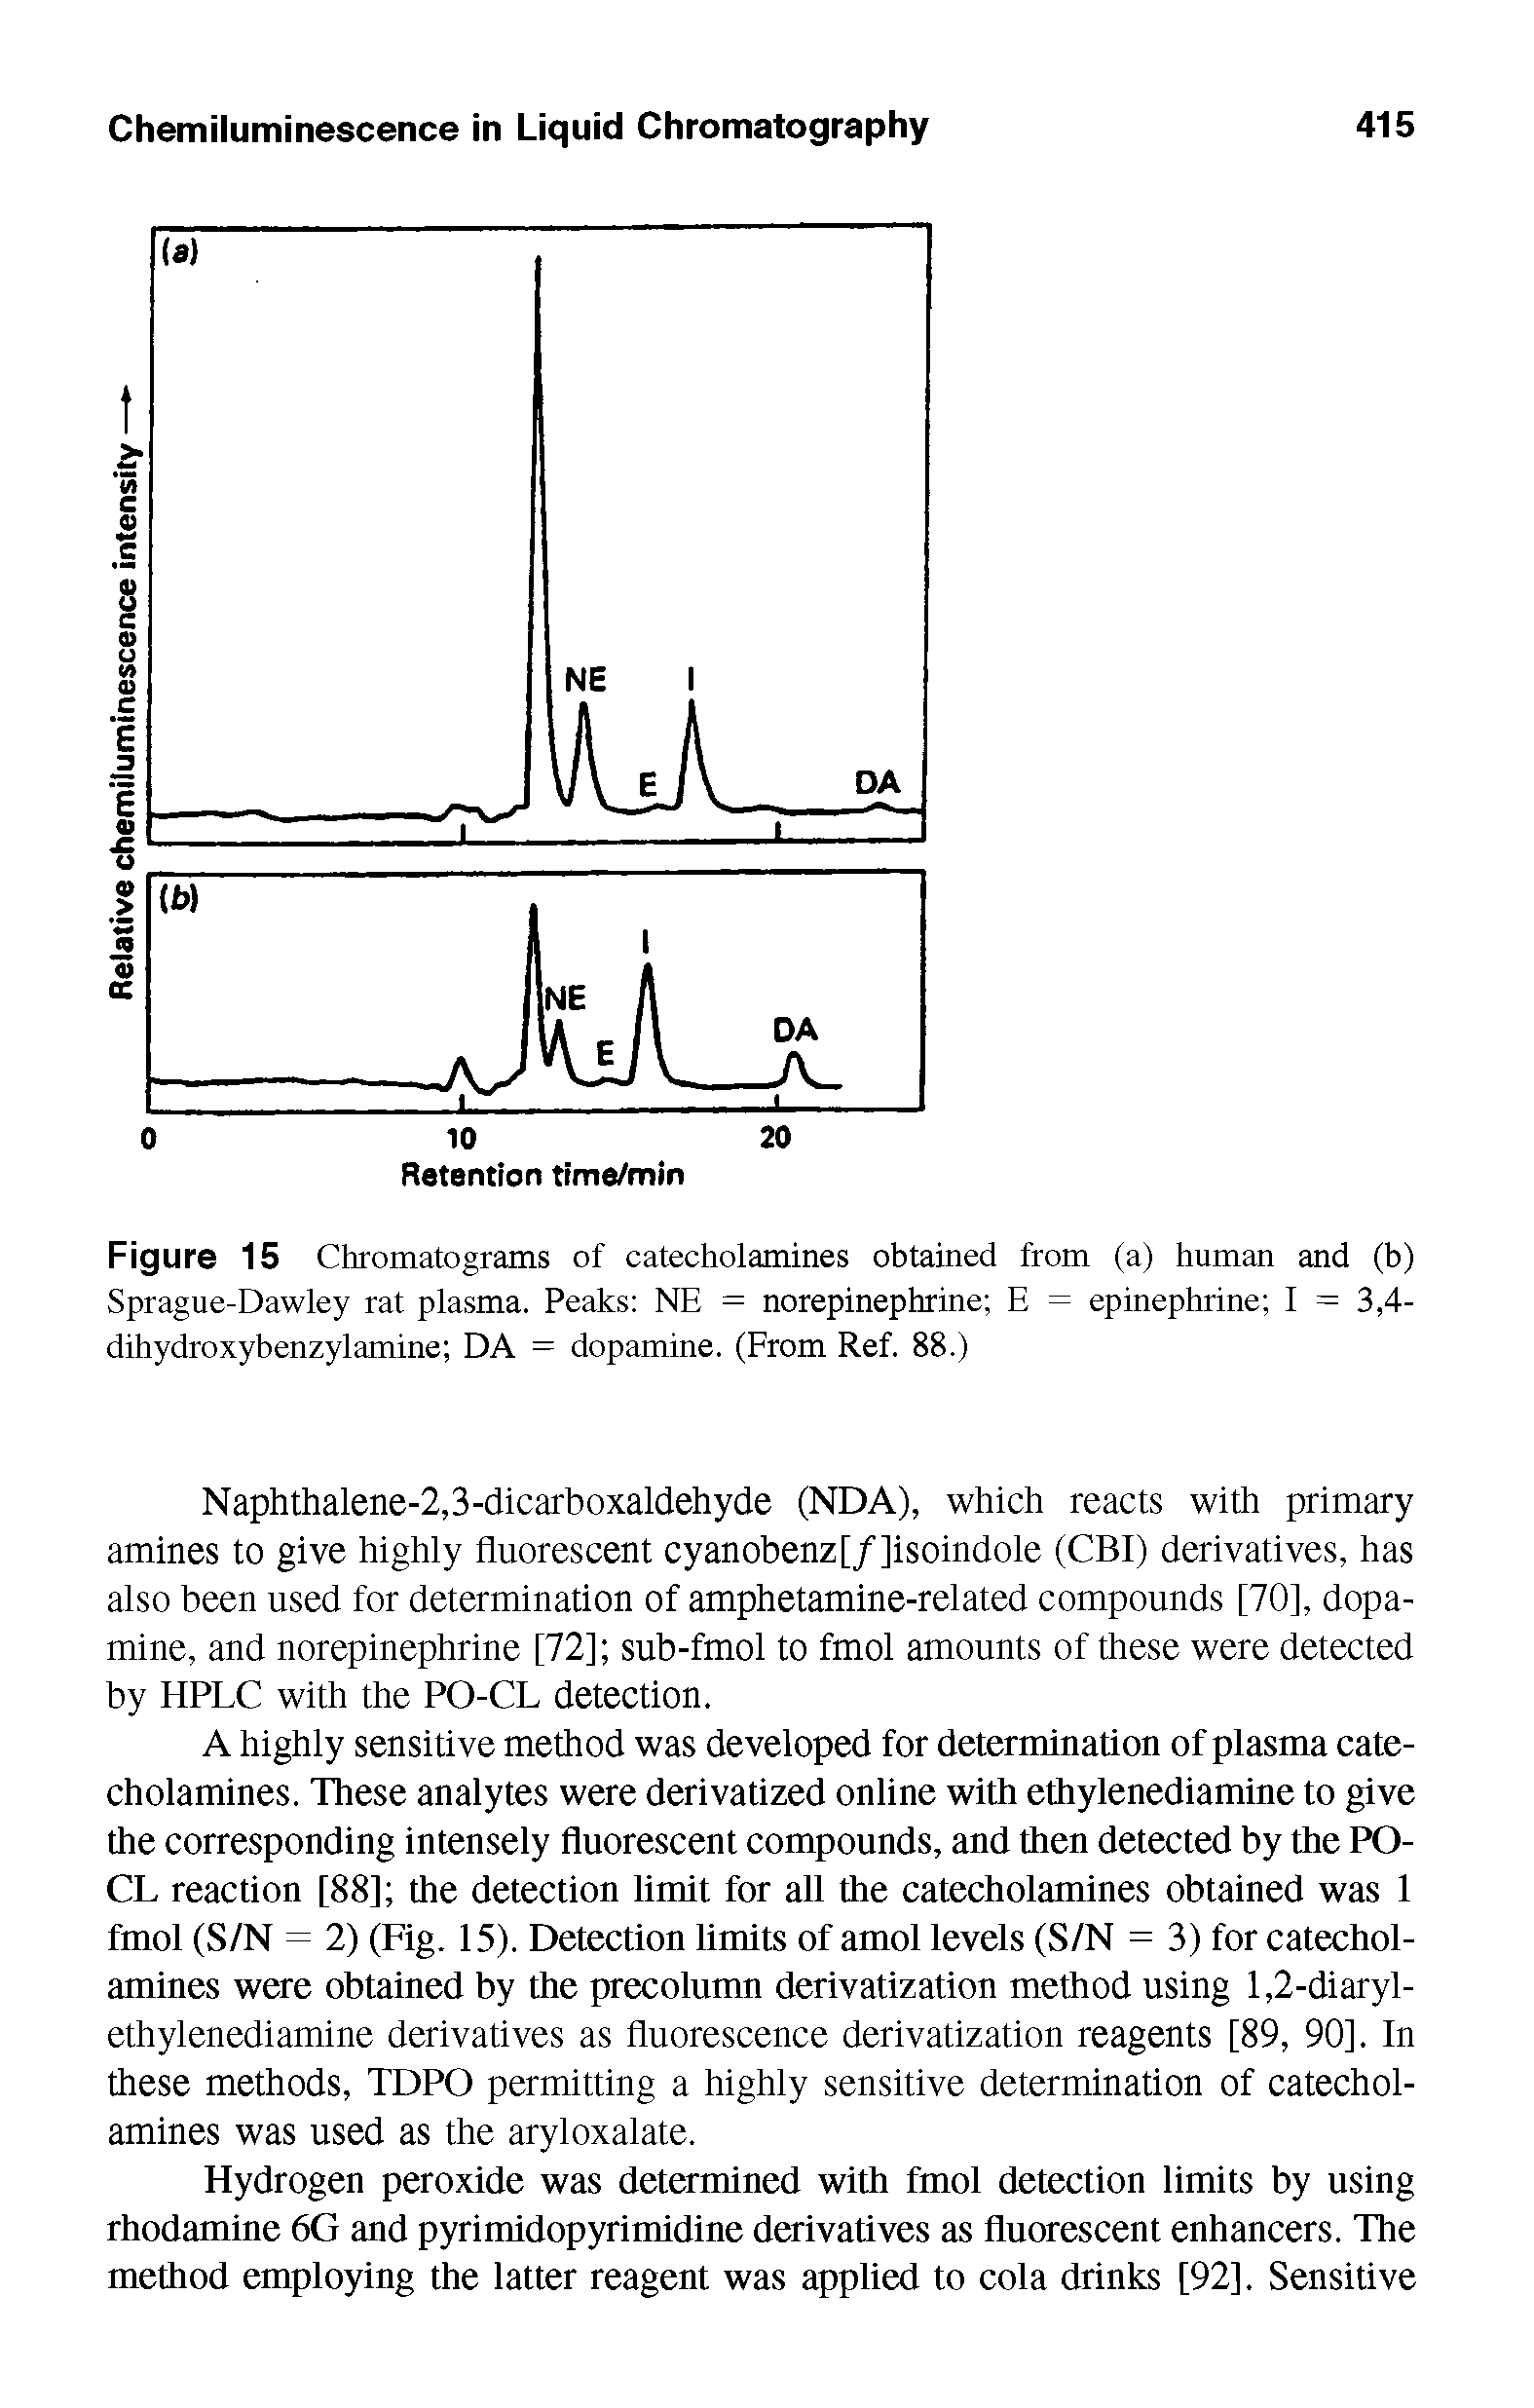 Figure 15 Chromatograms of catecholamines obtained from (a) human and (b) Sprague-Dawley rat plasma. Peaks NE = norepinephrine E = epinephrine I = 3,4-dihydroxybenzylamine DA = dopamine. (From Ref. 88.)...